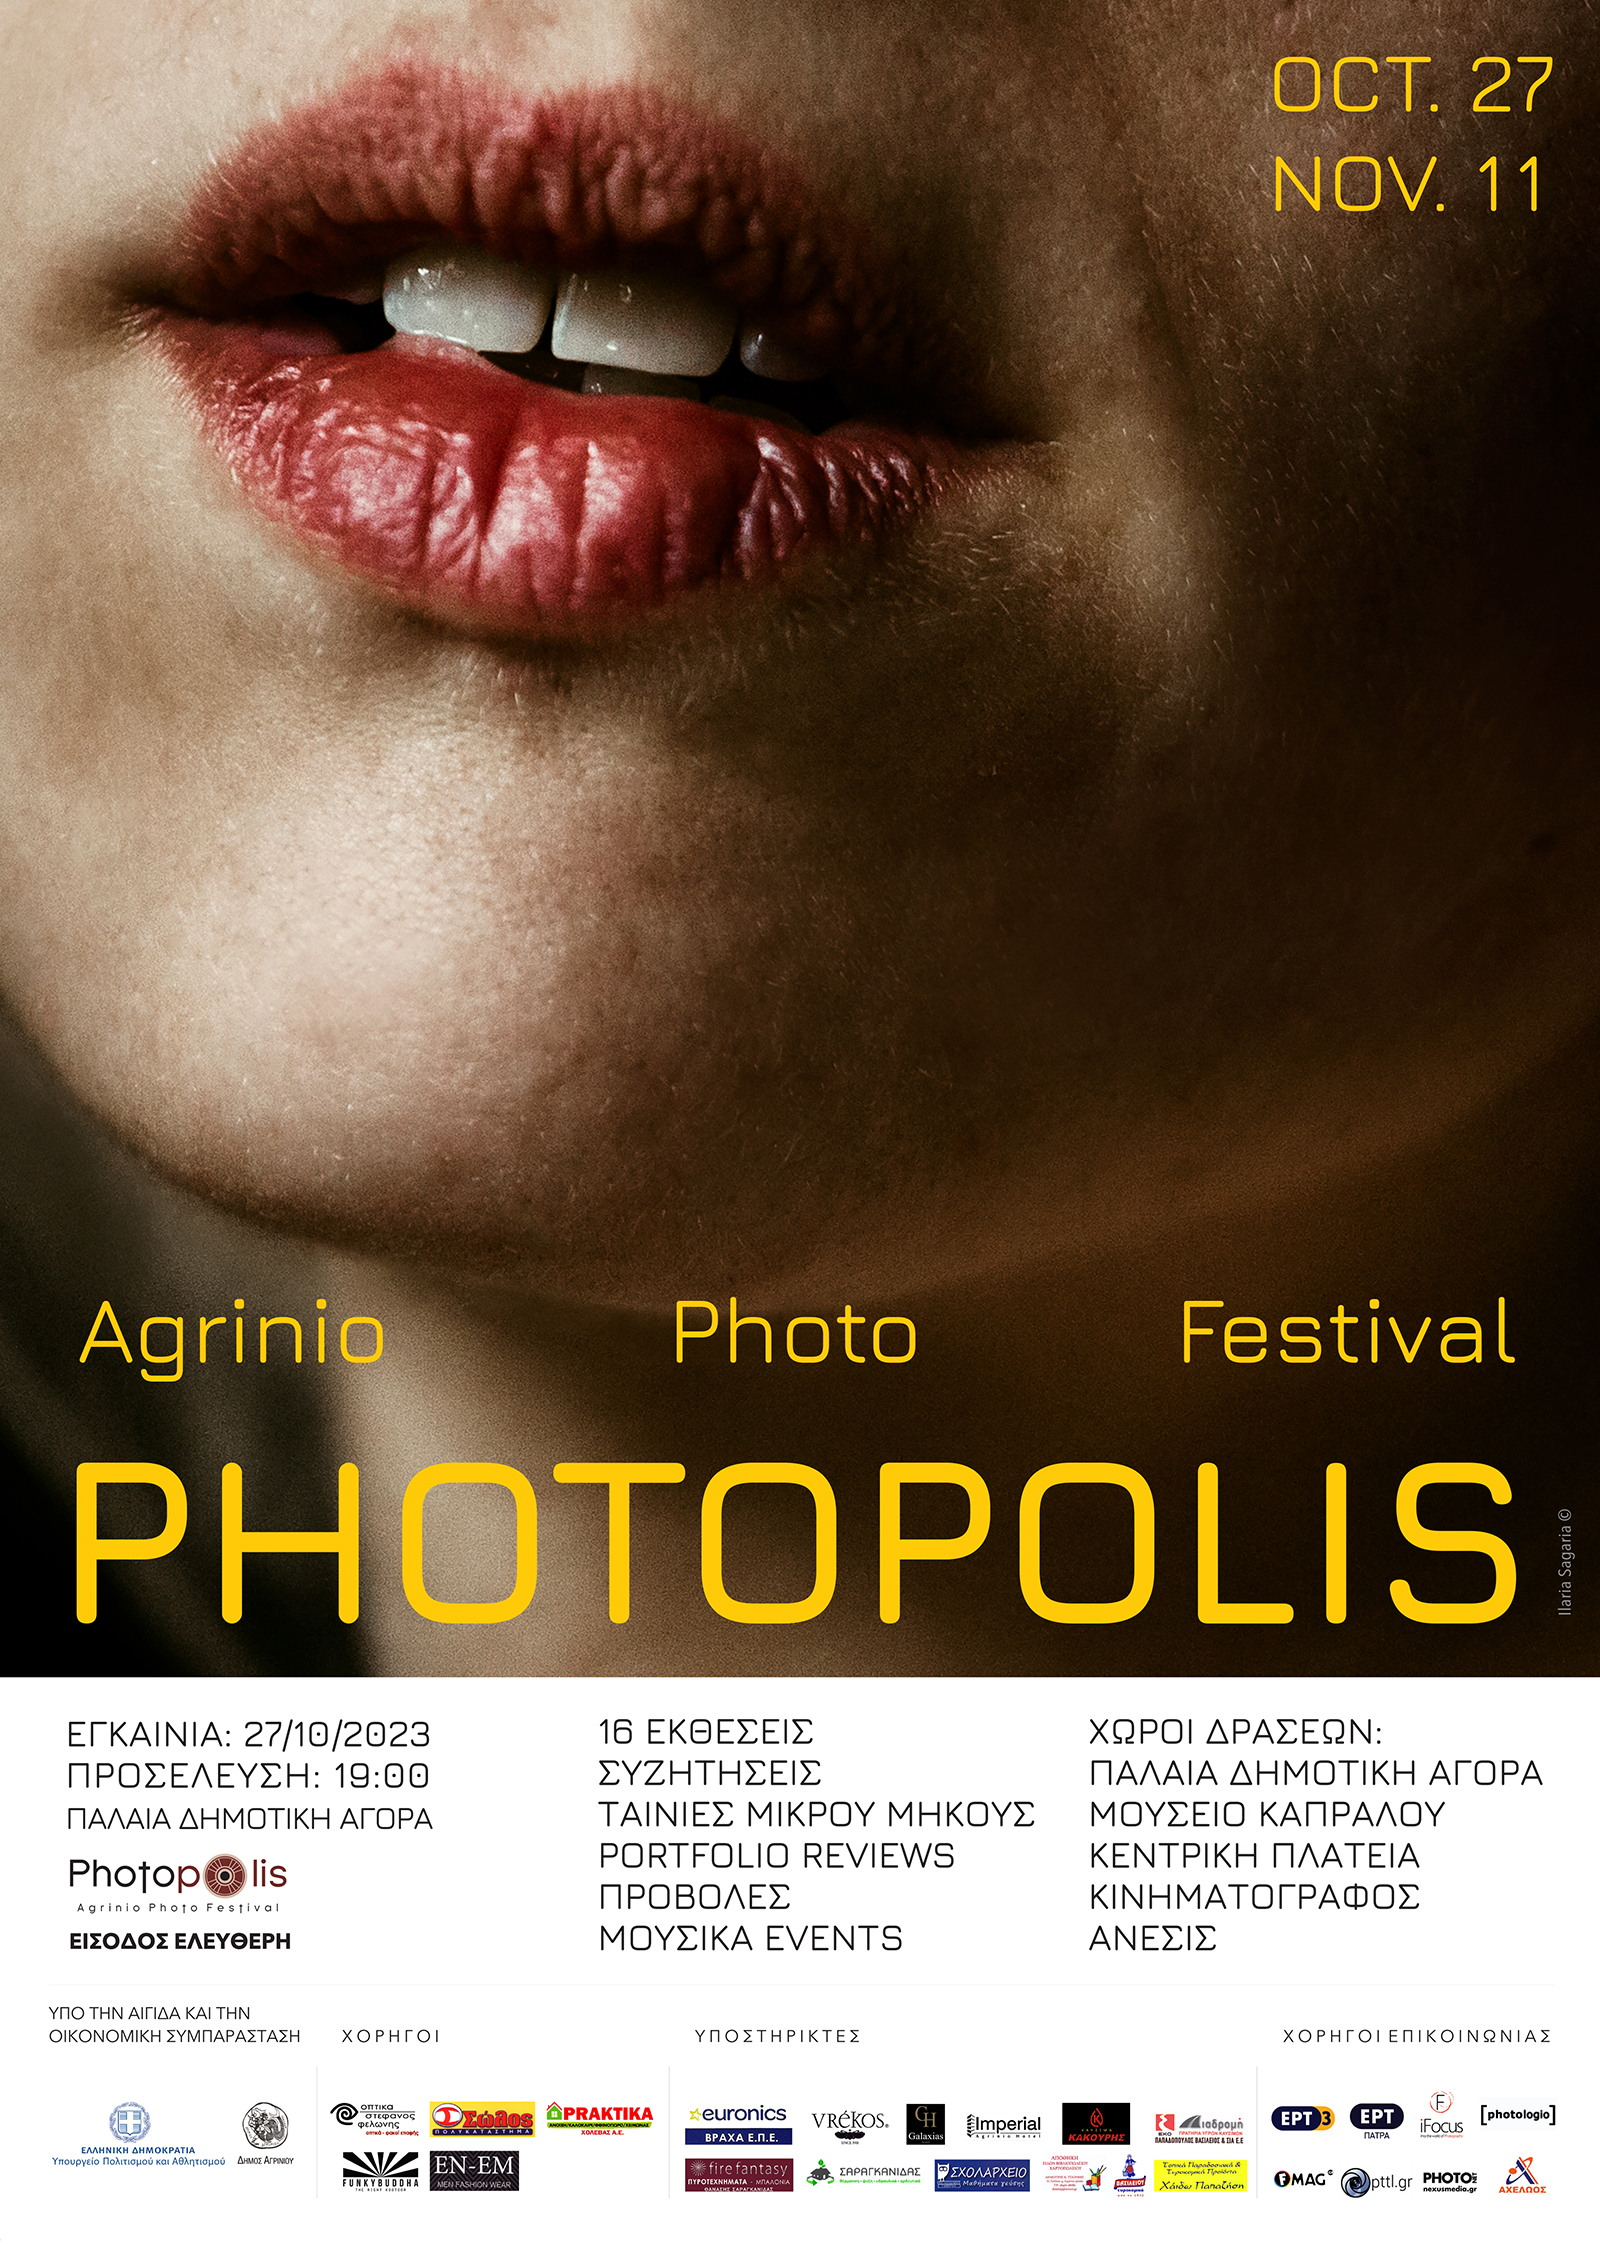 Photopolis Agrinio Photo Festival: Ξεκίνησε και παρουσιάζει πληθώρα εκθέσεων και κινηματογραφικές ταινίες